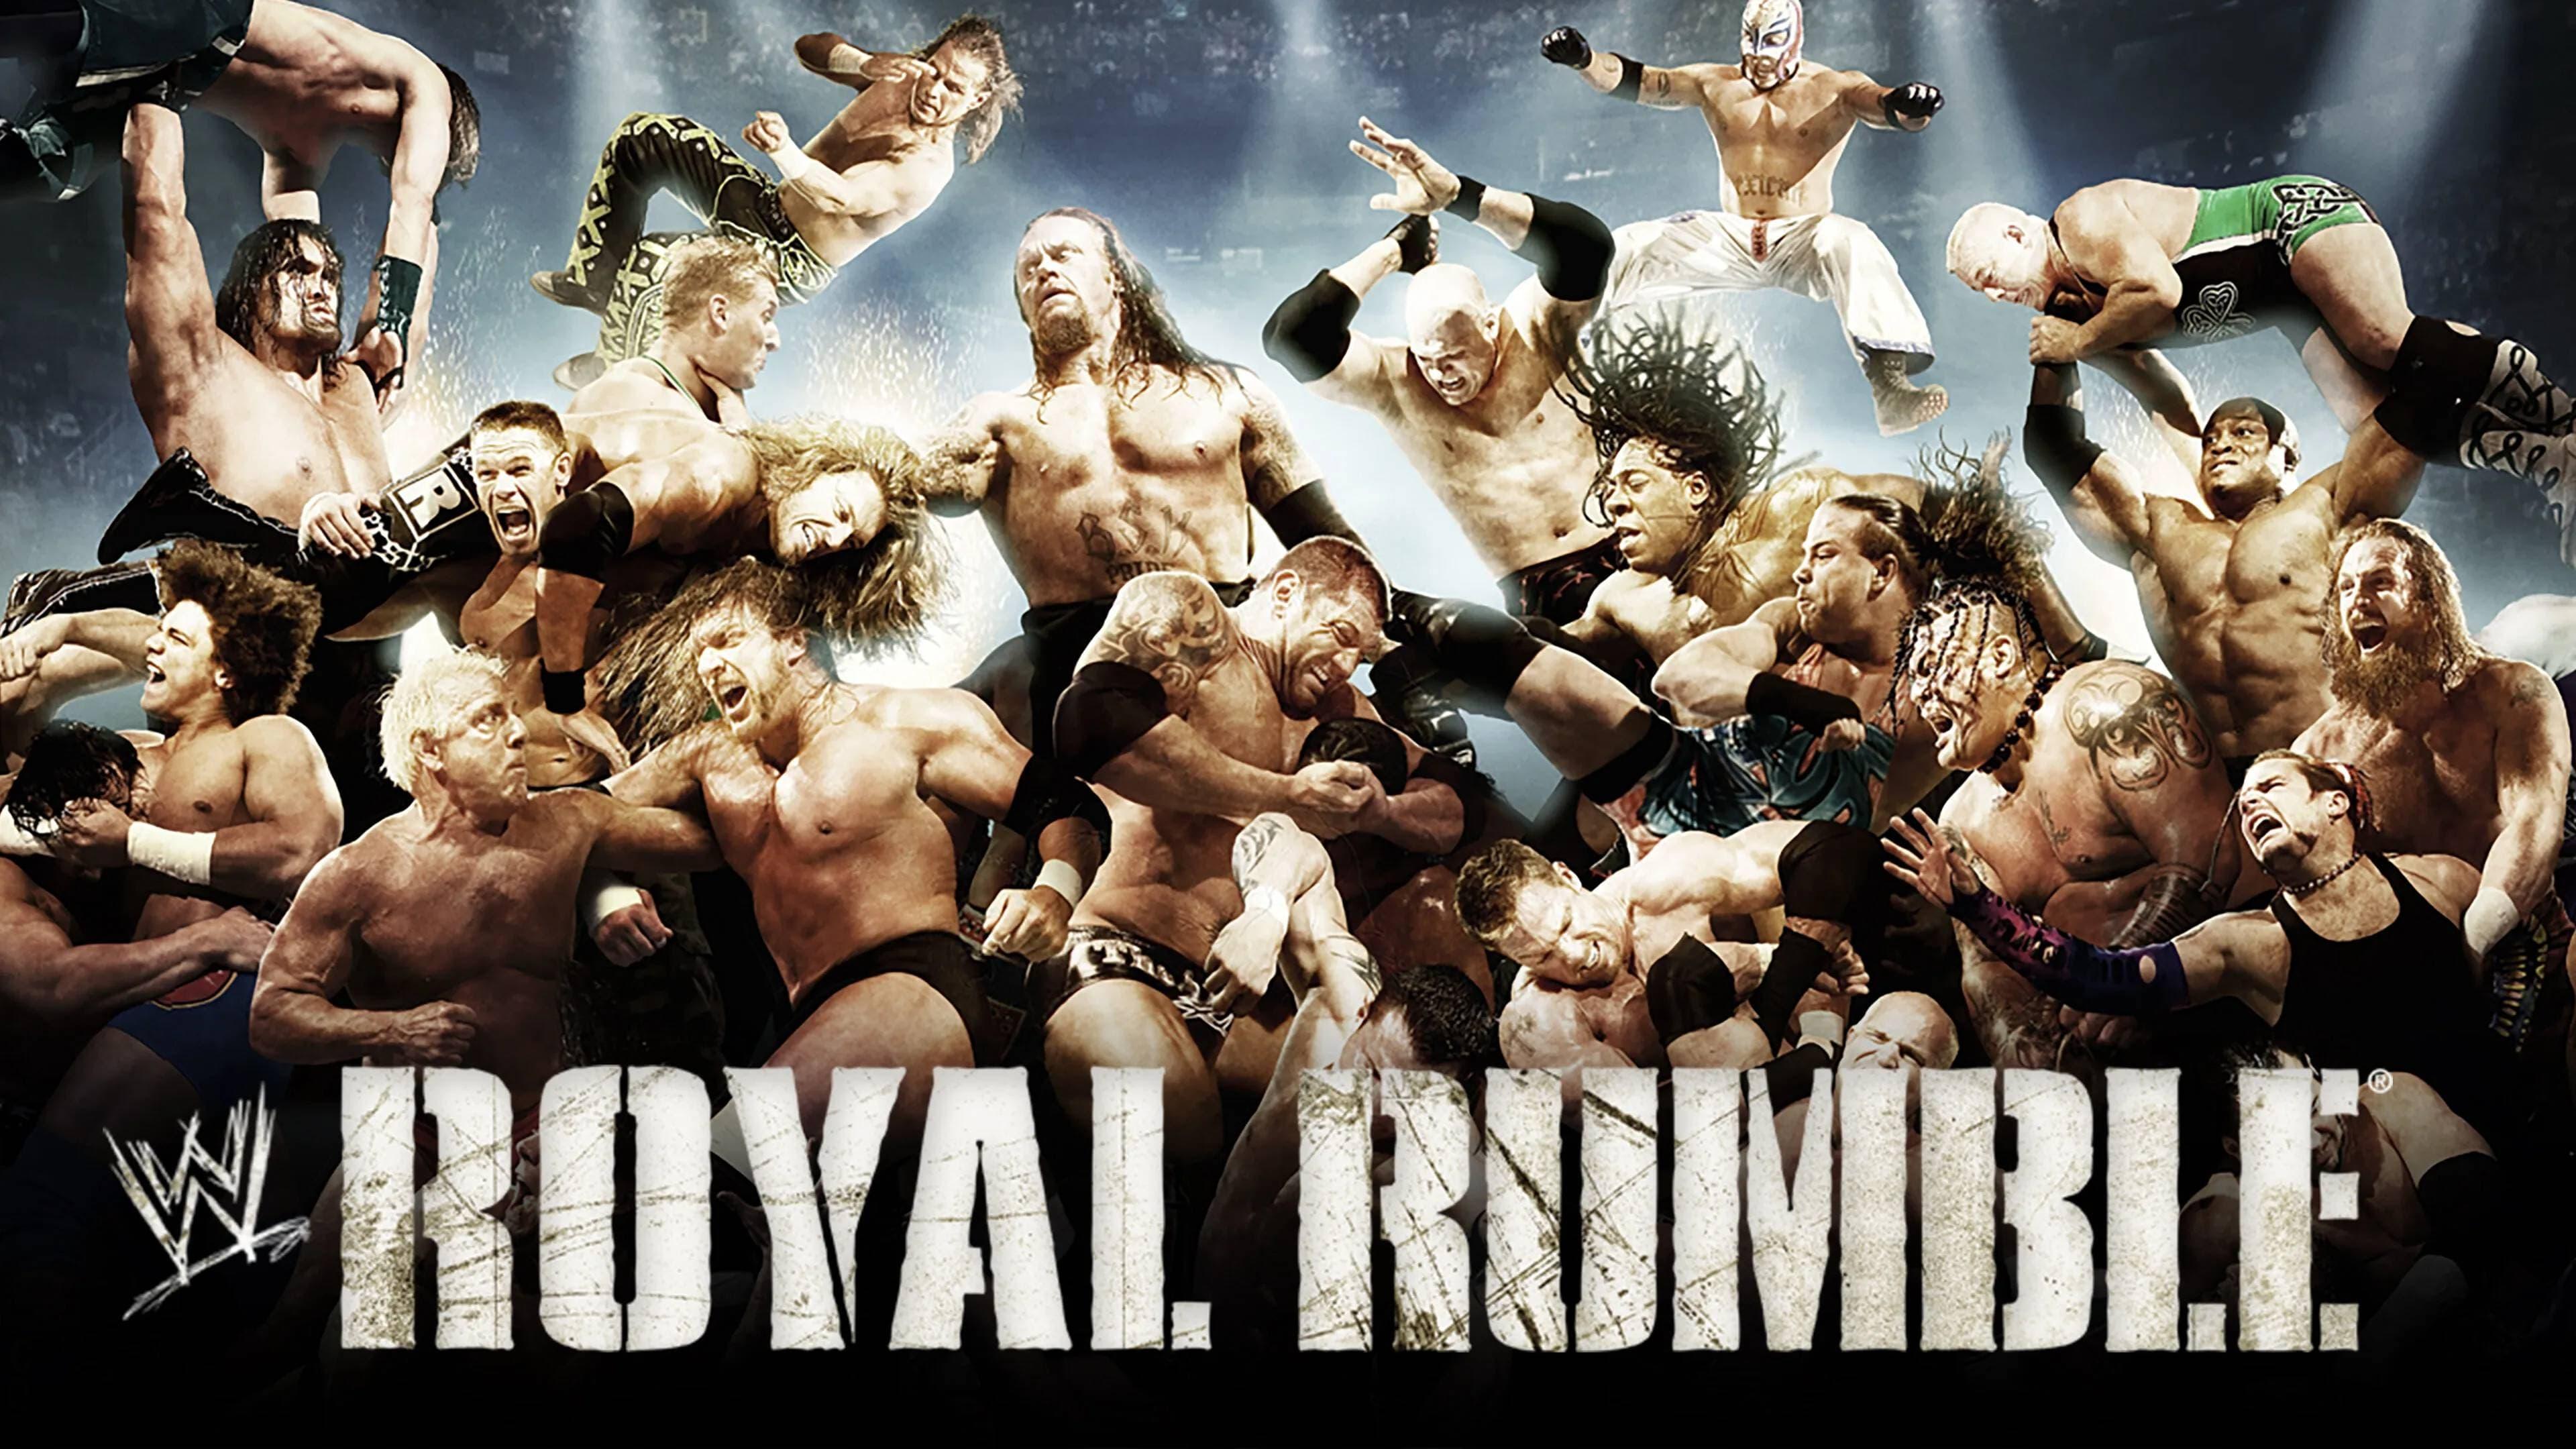 WWE Royal Rumble 2007 backdrop